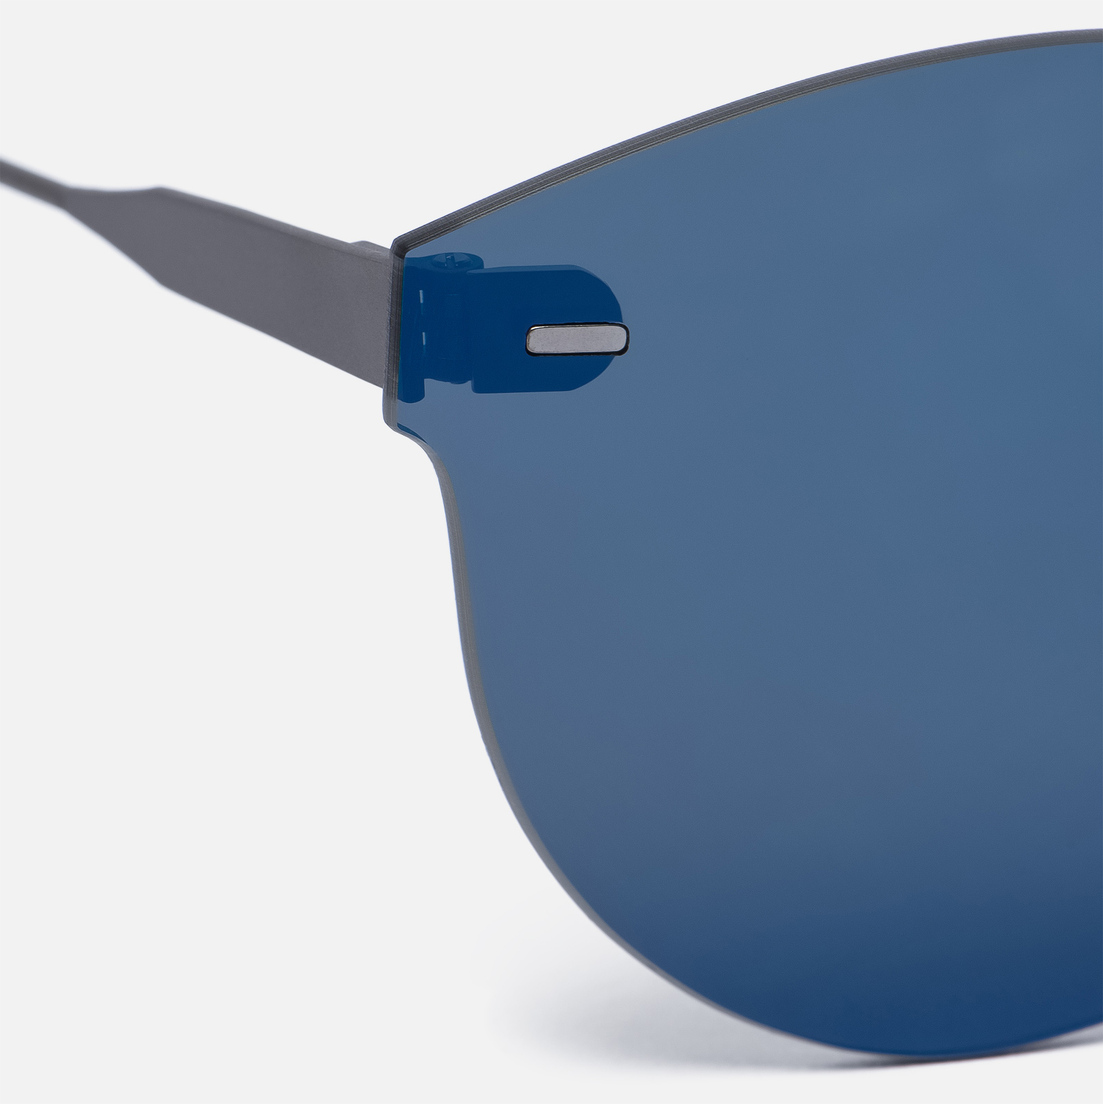 RETROSUPERFUTURE Солнцезащитные очки Tuttolente Panama